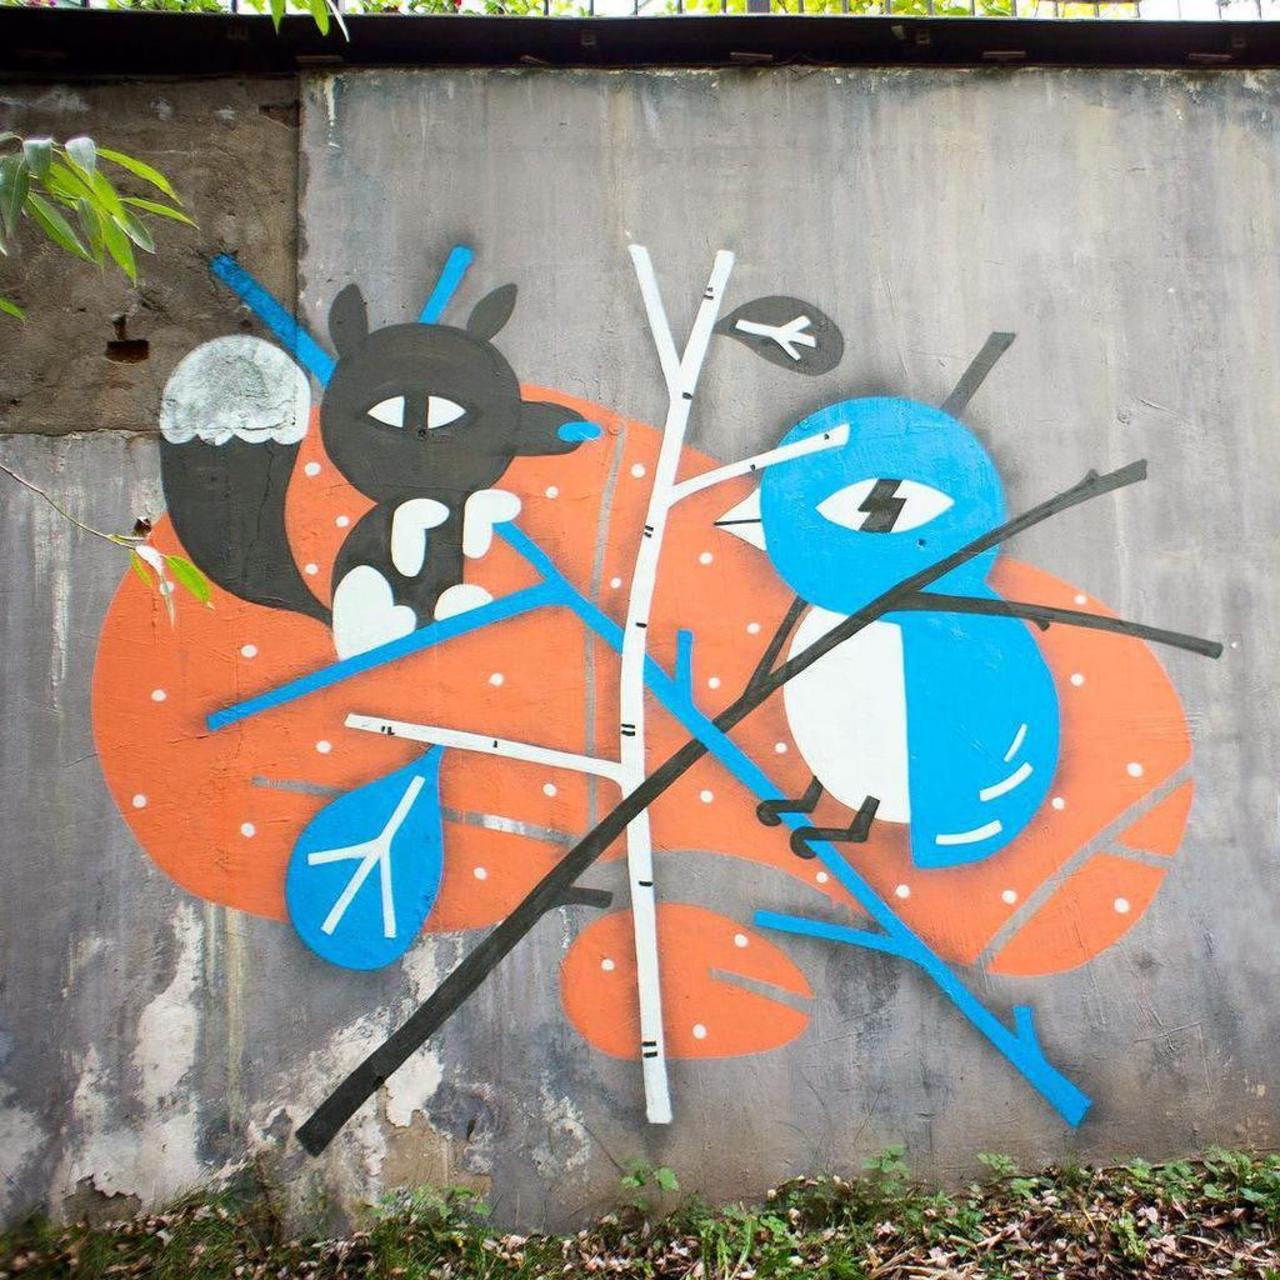 RT artpushr: via #plushedelica "http://bit.ly/1ZcptVw" #graffiti #streetart http://t.co/eBCqfmyxFh https://goo.gl/7kifqw